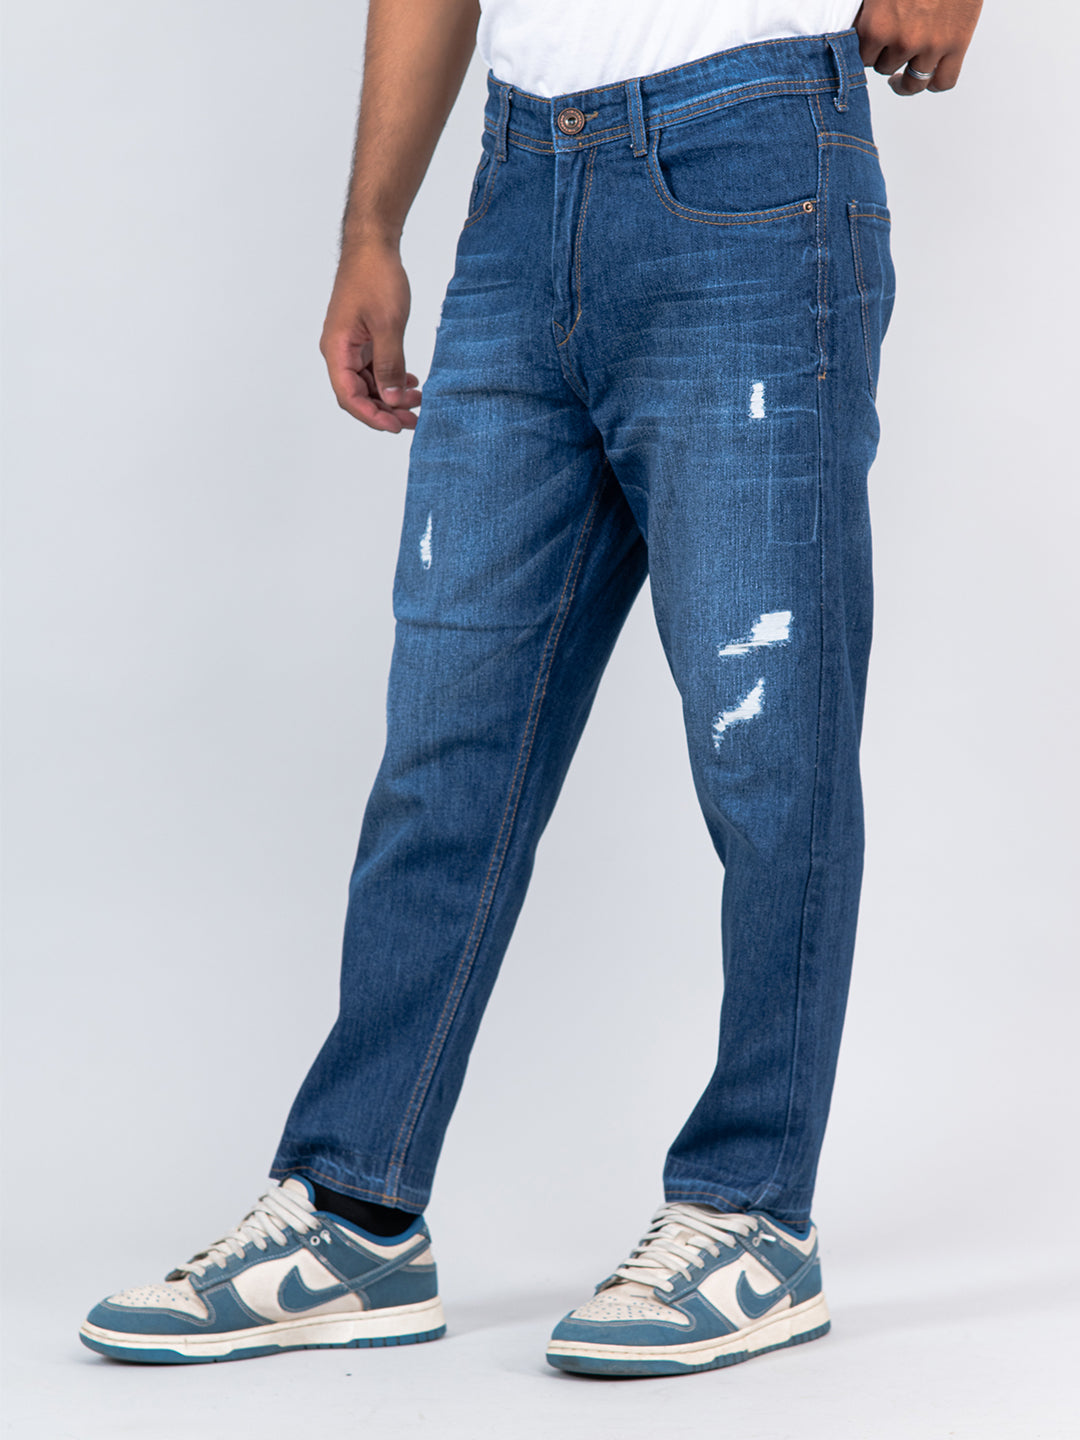 Trousers/trousers Men/Jeans/Denim Men/Men// Loose Jeans/Black Pants/Guy Pants  Ankle-Length Jeans Men Black Korean Version Trendy Slim-fit Skinny Pants Men  | Shopee Singapore